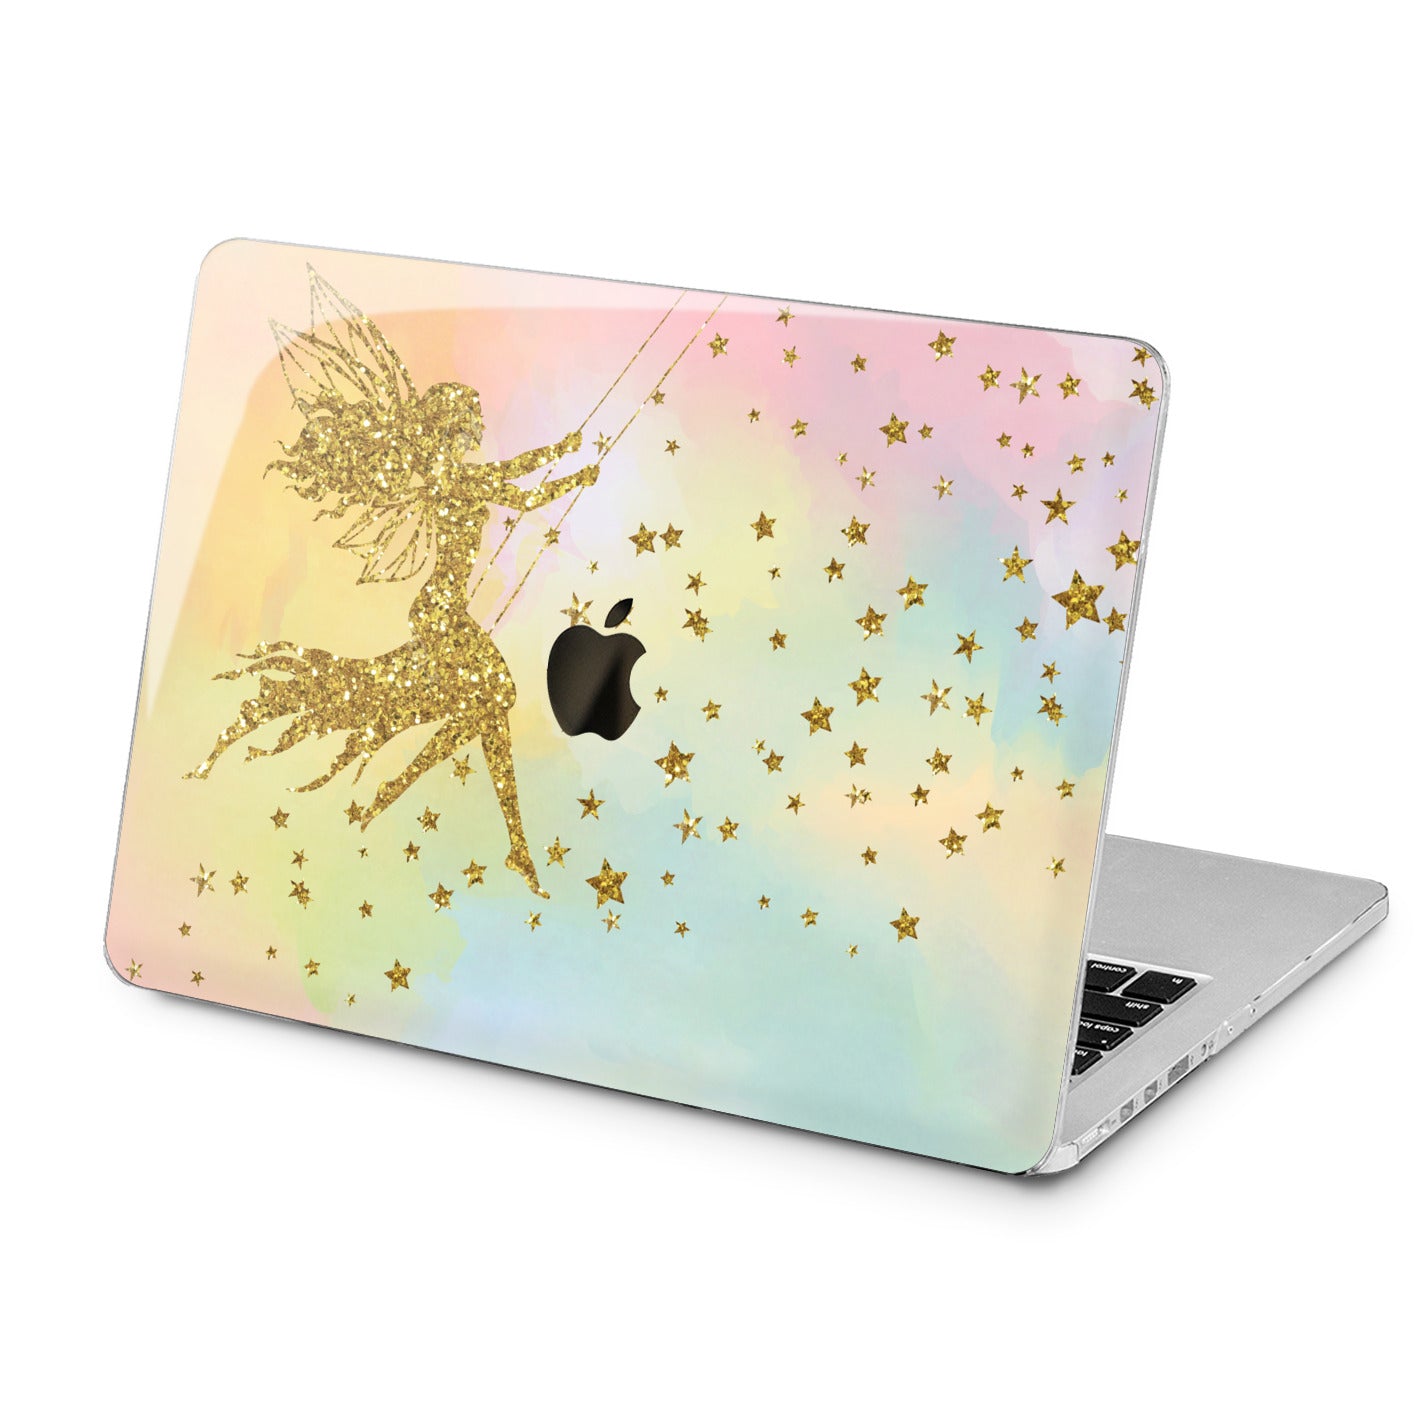 Lex Altern hard plastic case for your laptop with unique design!